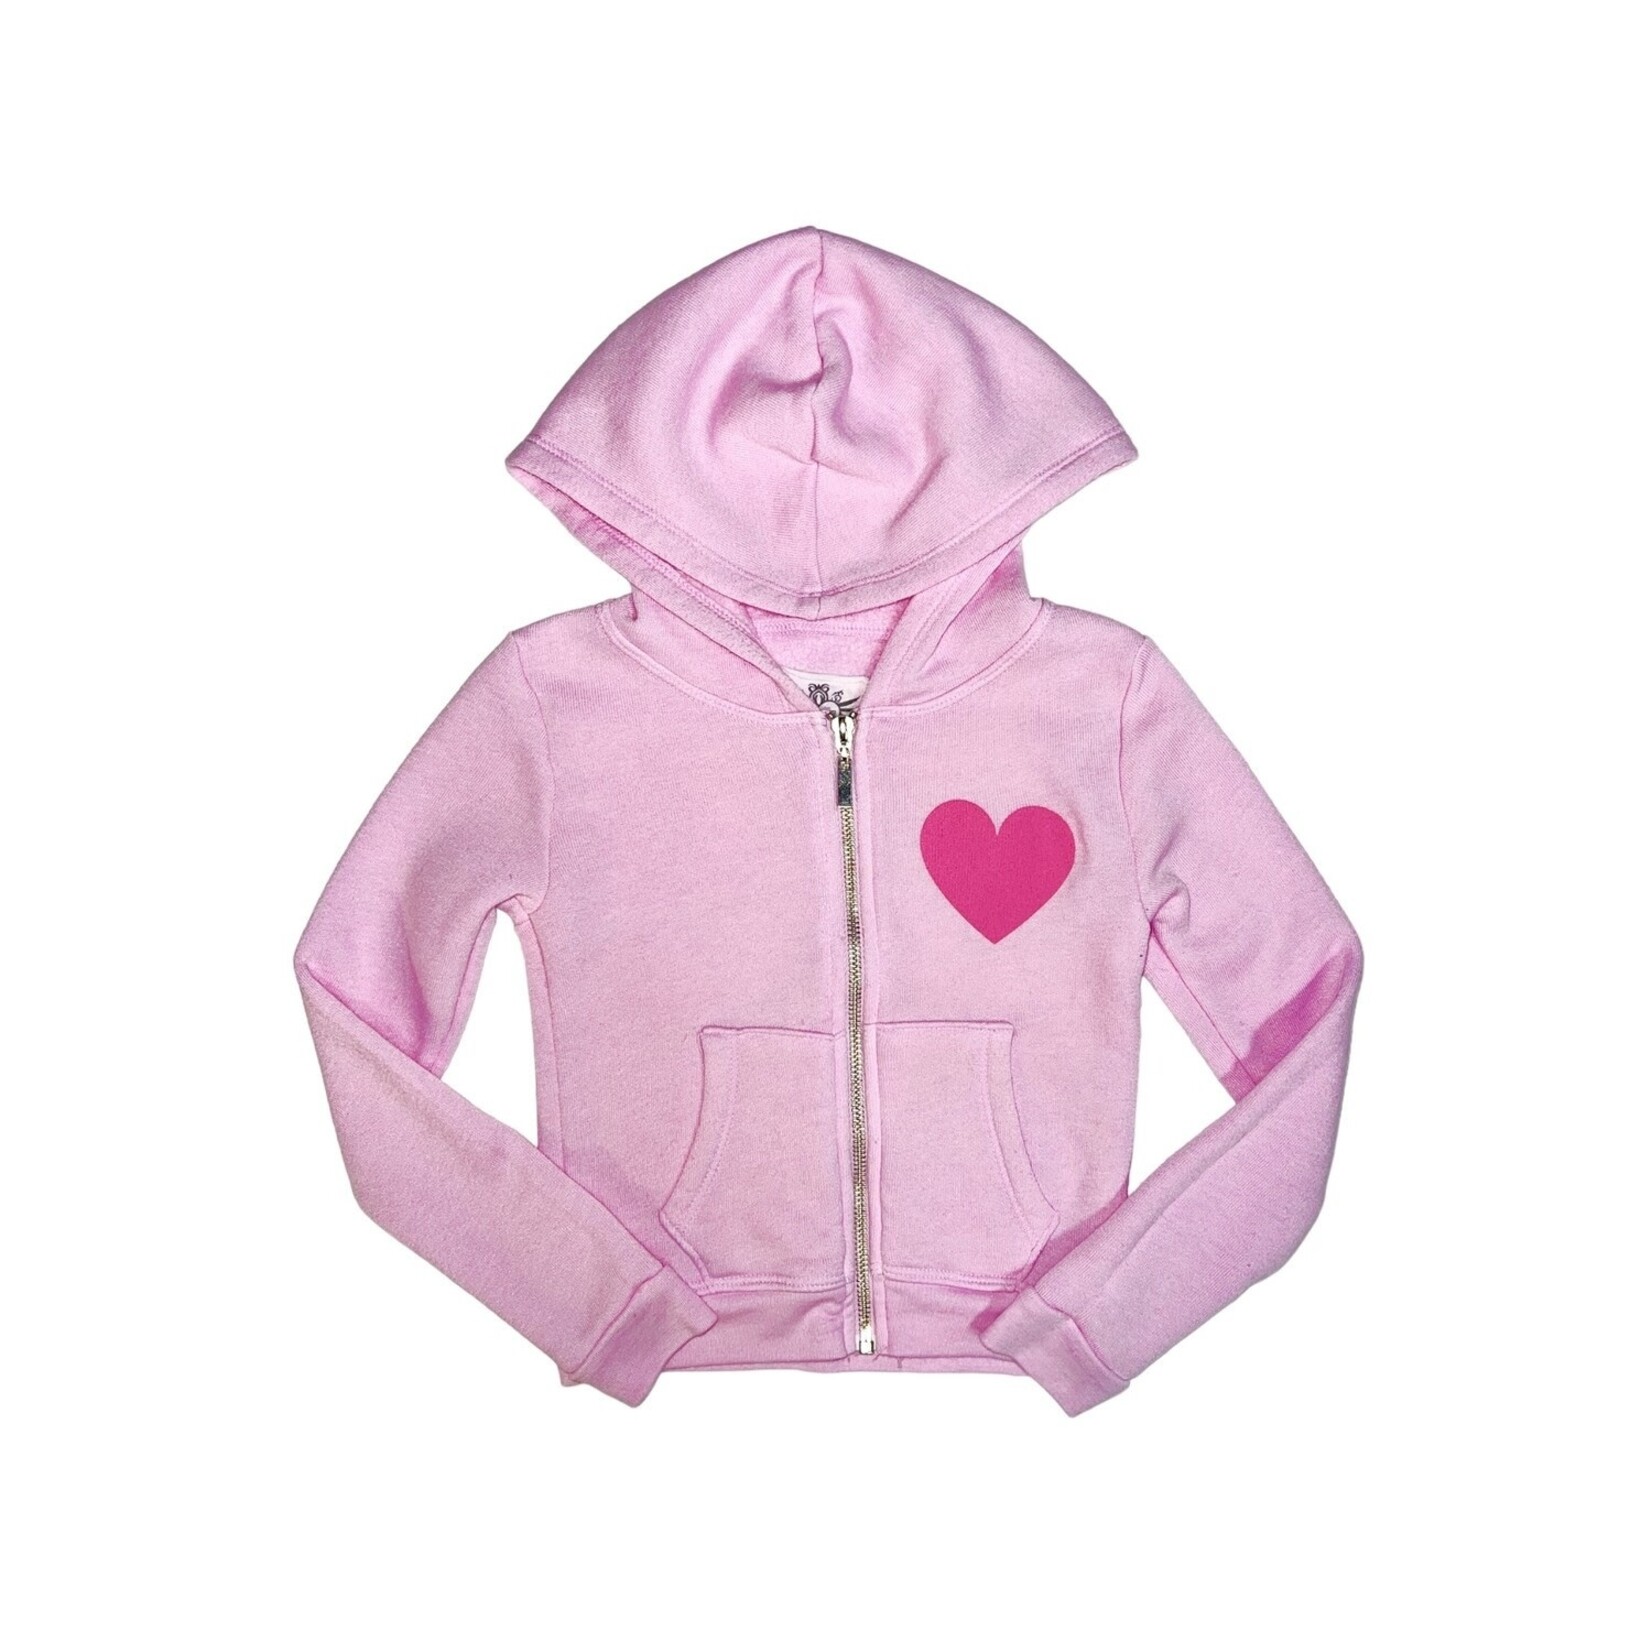 T2Love Pink Hooded Zip Jacket